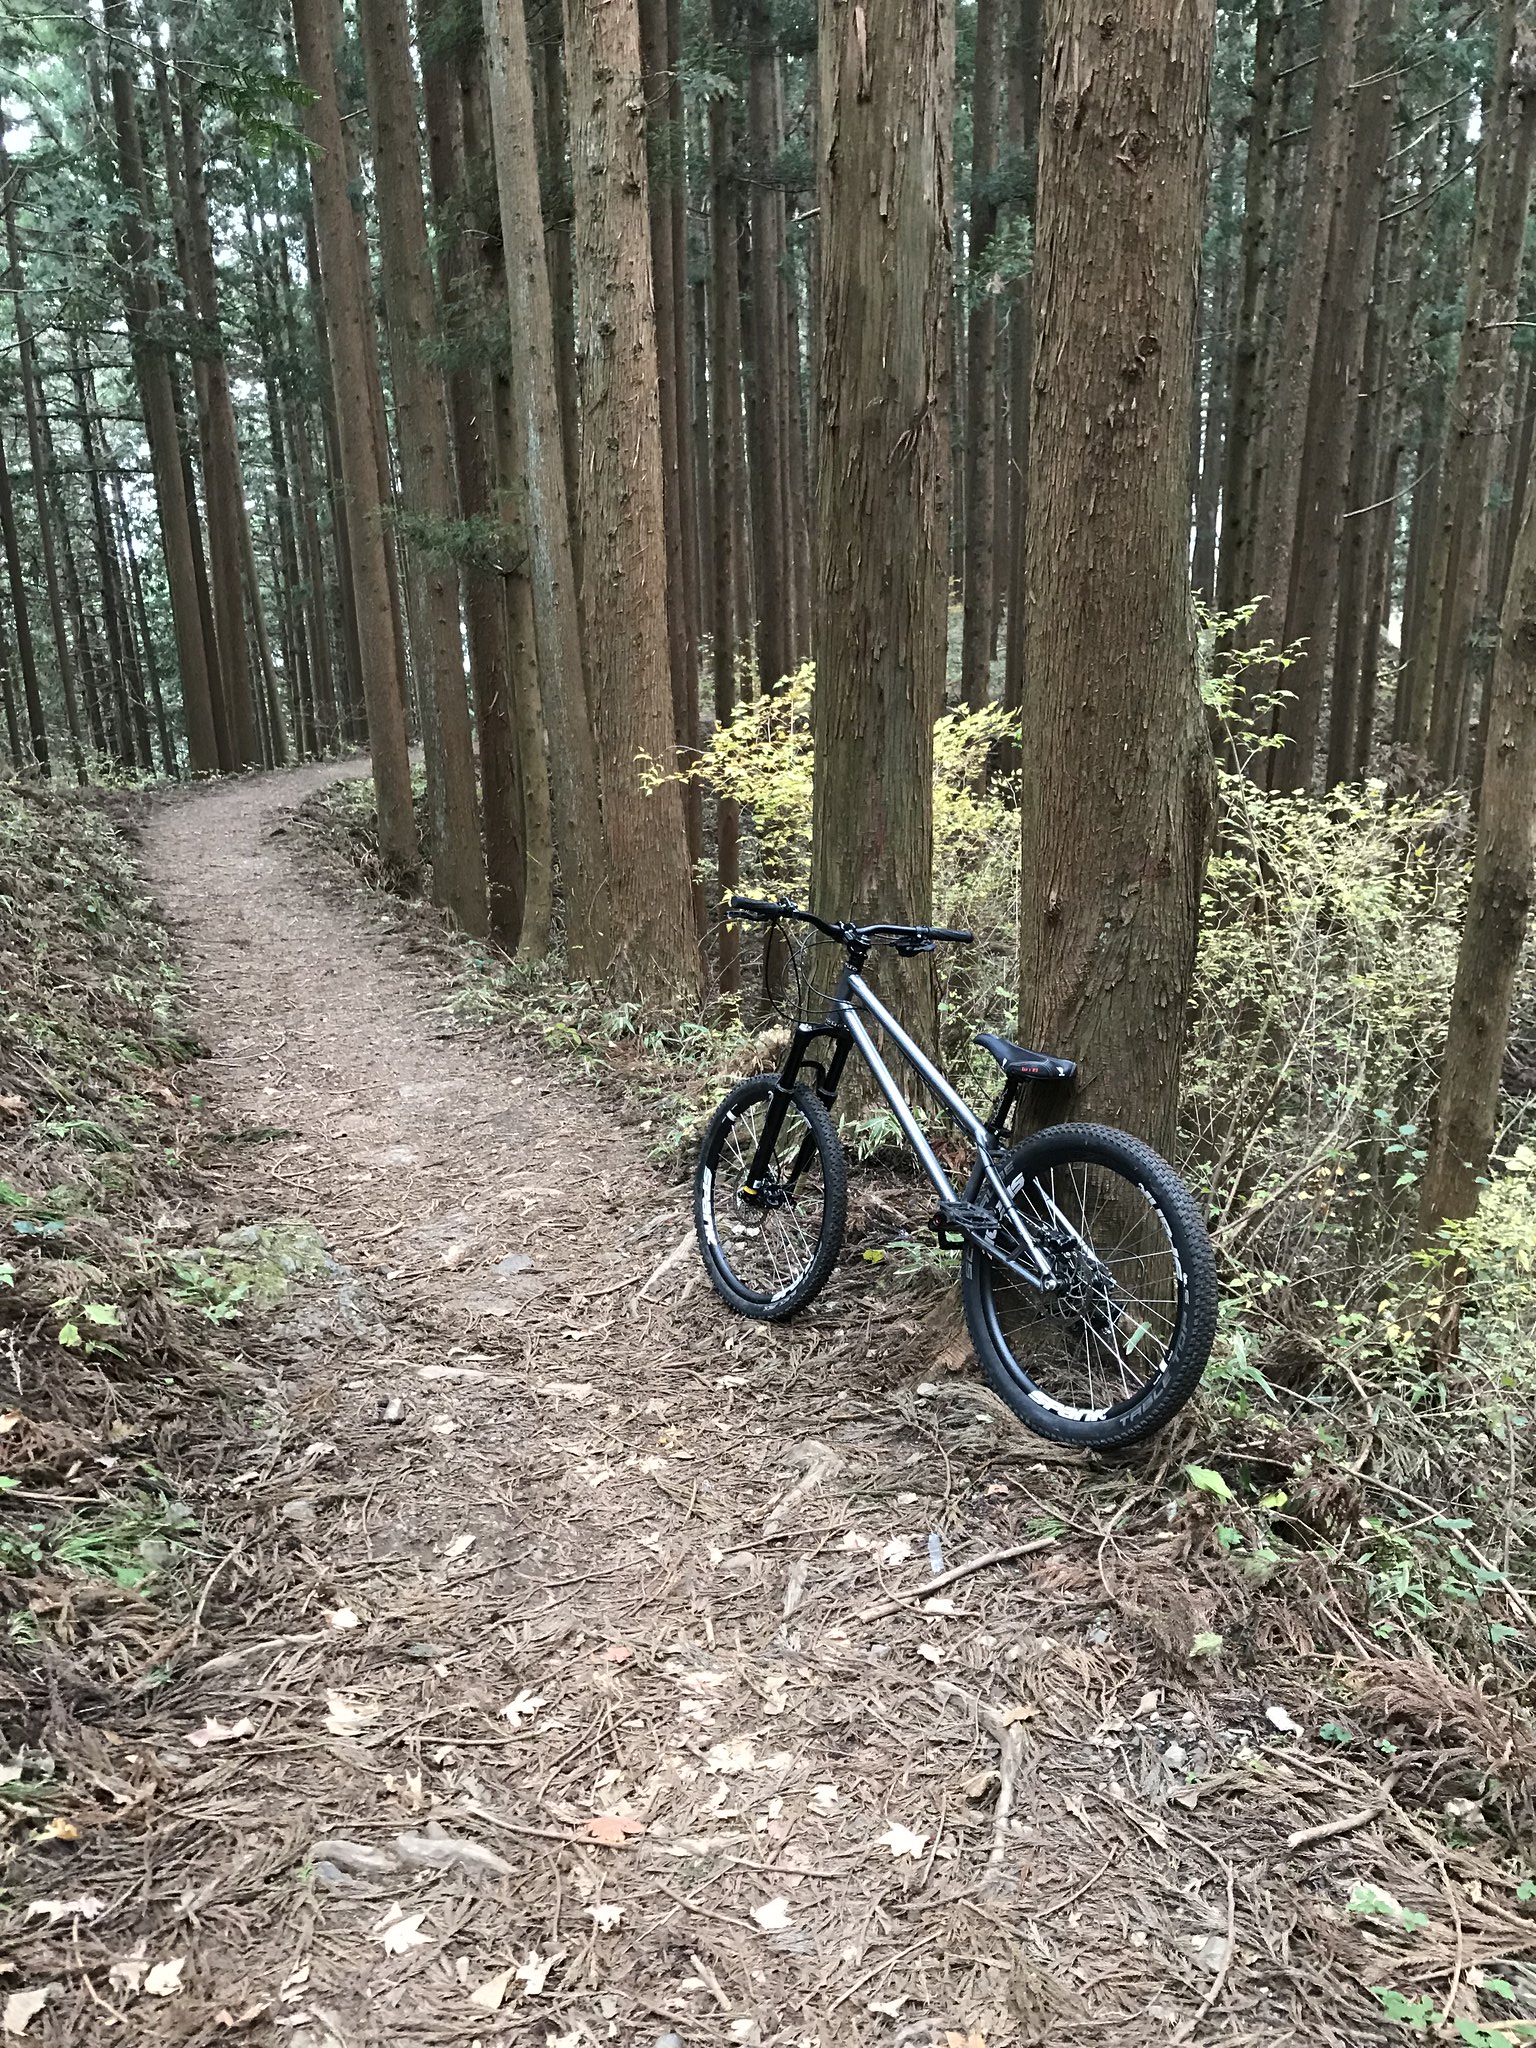 Trail ride in Tokyo